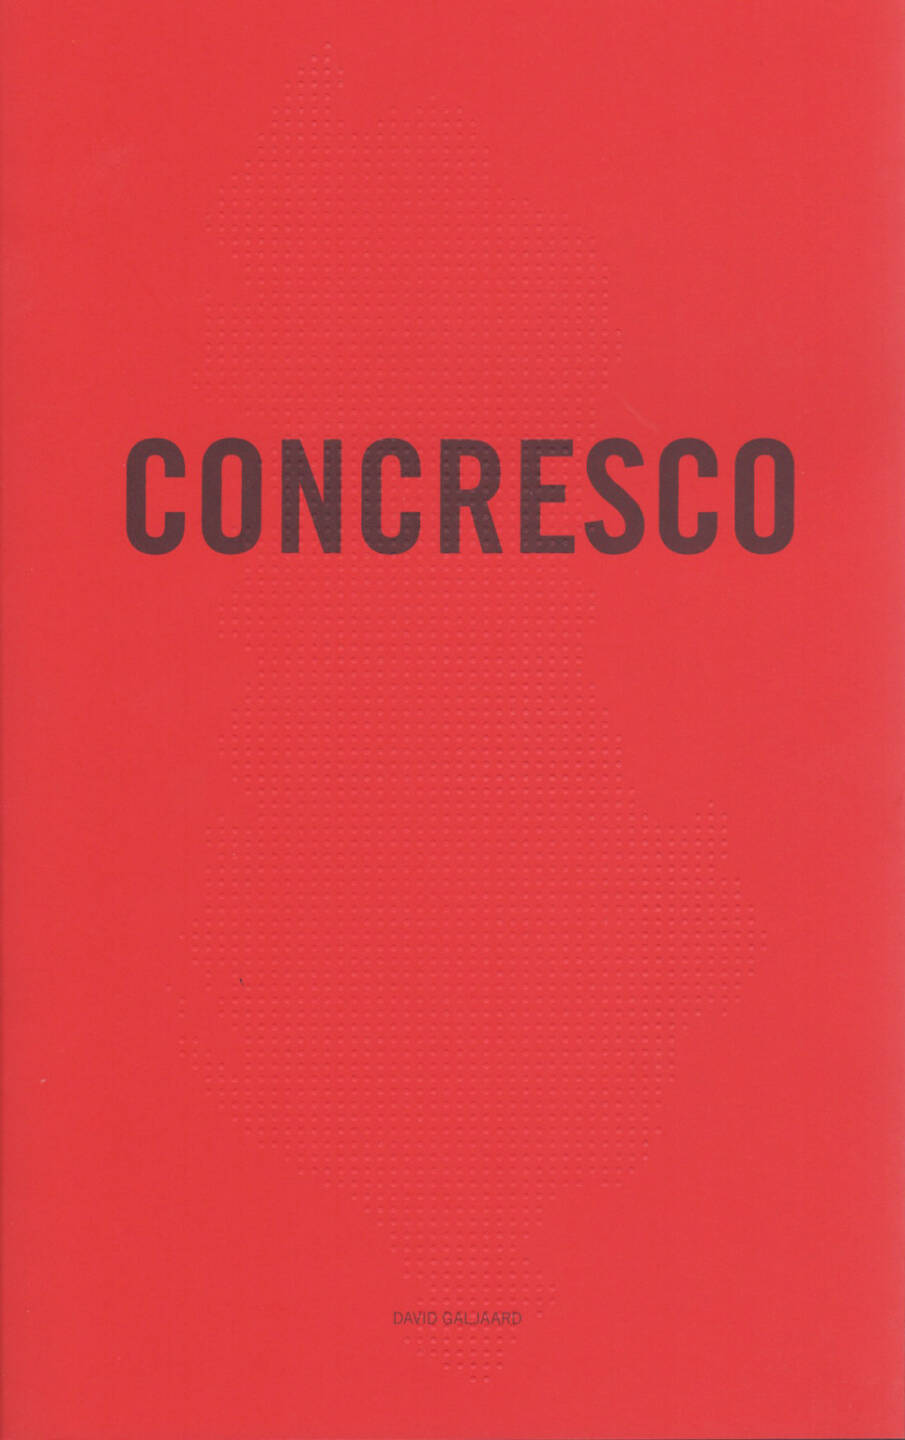 David Galjaard - Concresco, 2012, 200-250 Euro, http://josefchladek.com/book/david_galjaard_-_concresco